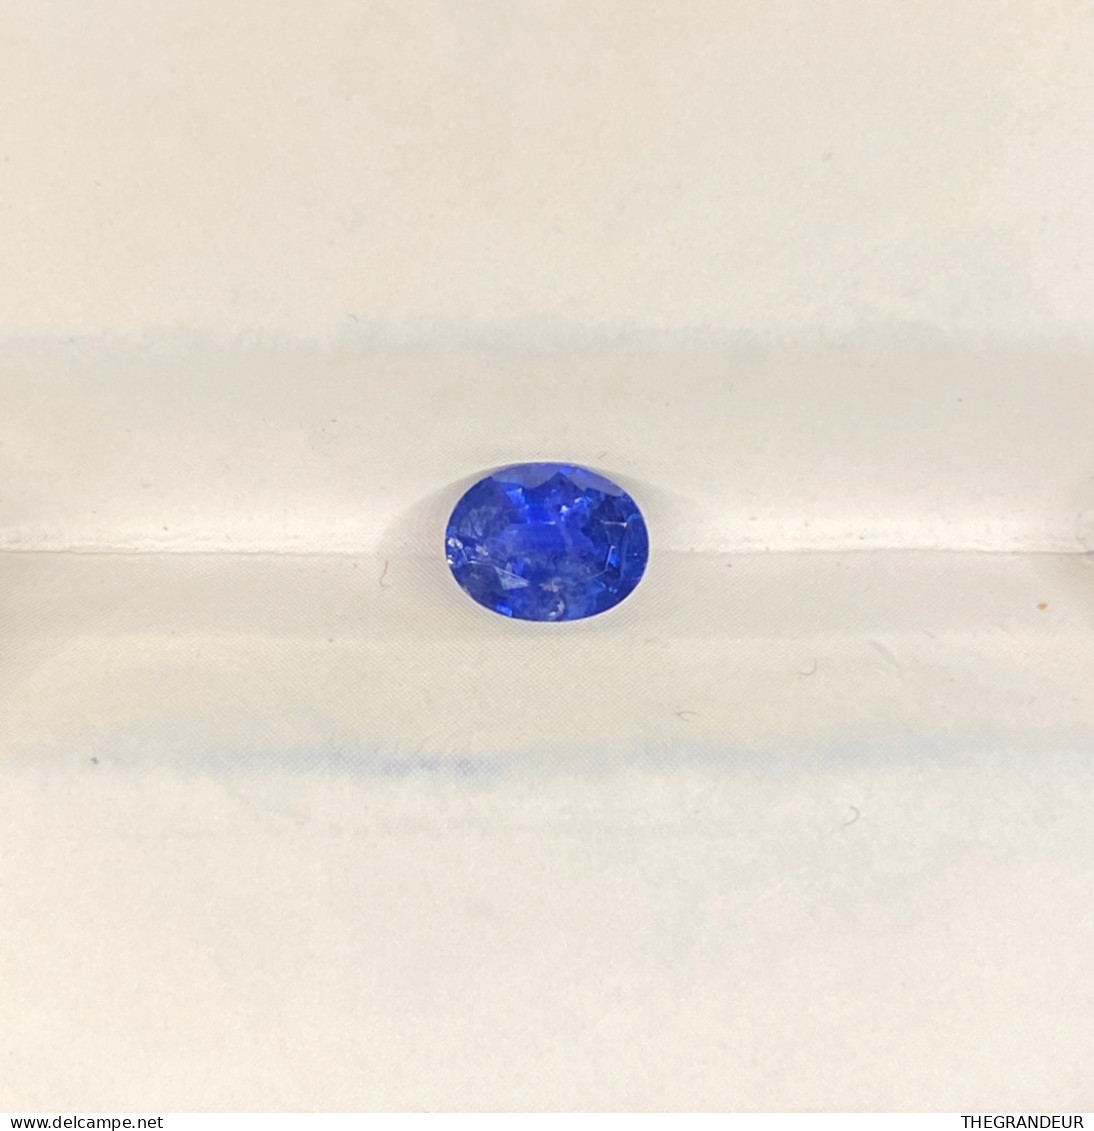 Natural Blue Sapphire Oval Cut 0.76 Carat from Sri Lanka